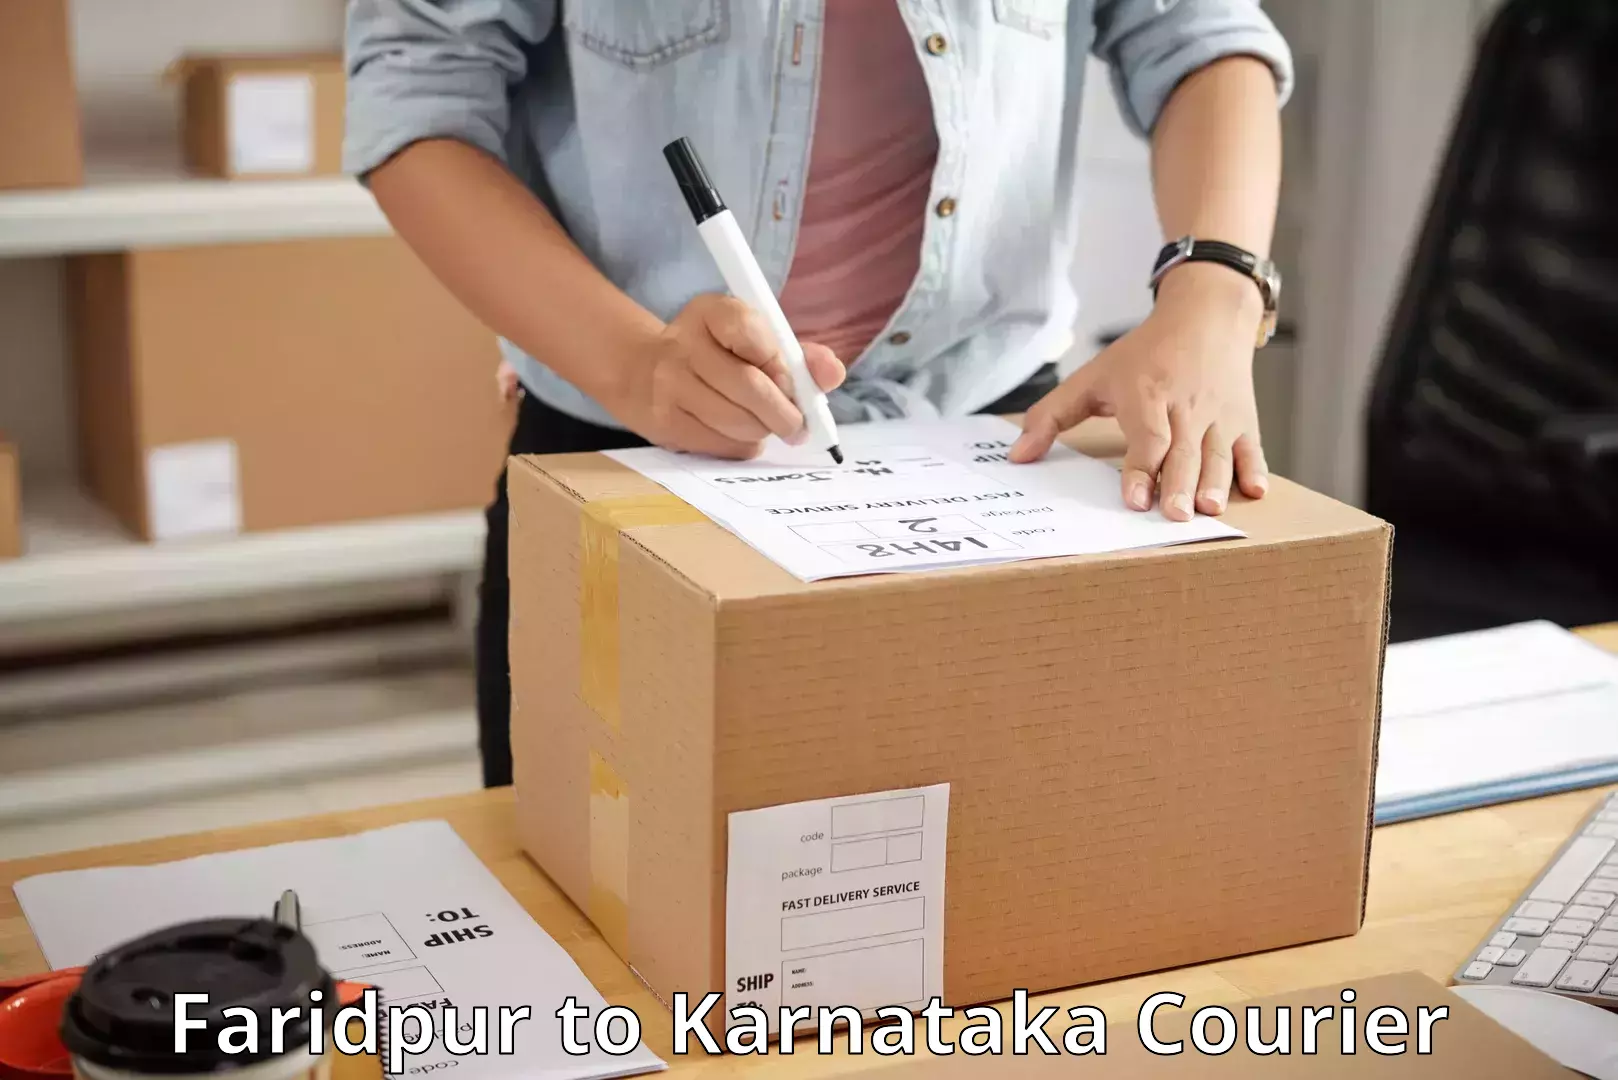 Digital courier platforms Faridpur to Karnataka